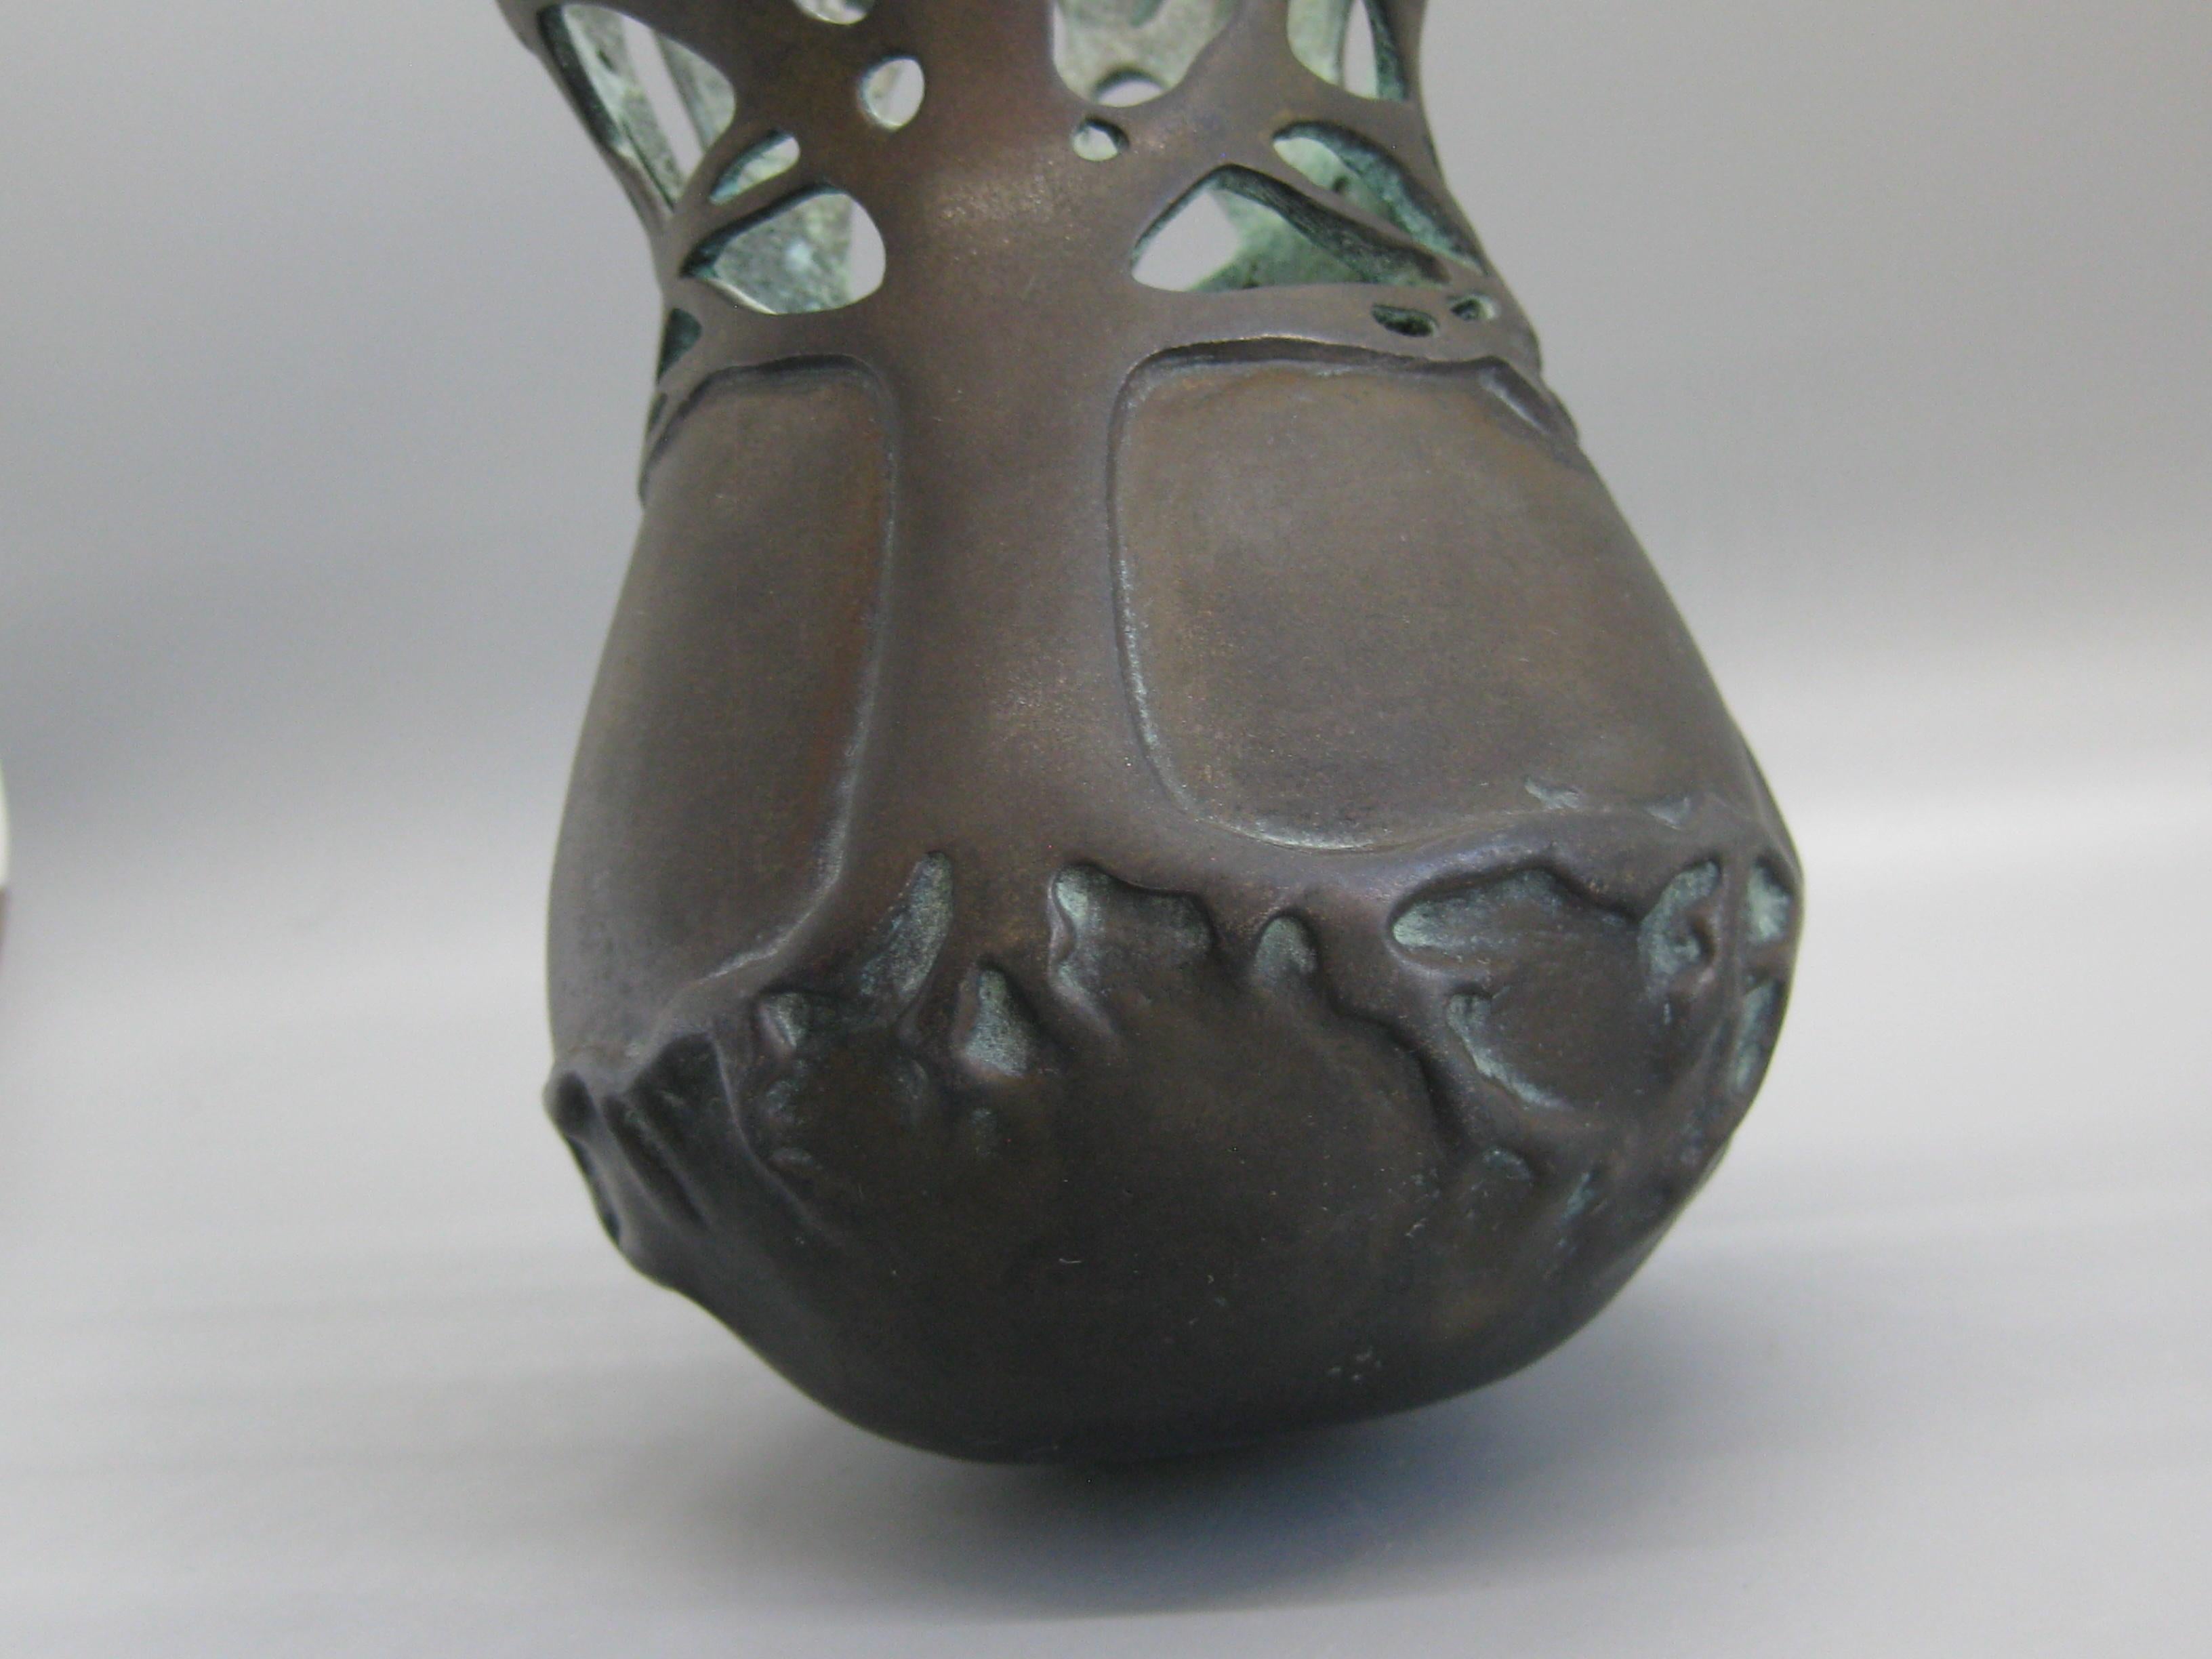 2001 Carol Alleman Organic Midcentury Bronze Vase Vessel Sculpture Limited 75 For Sale 8